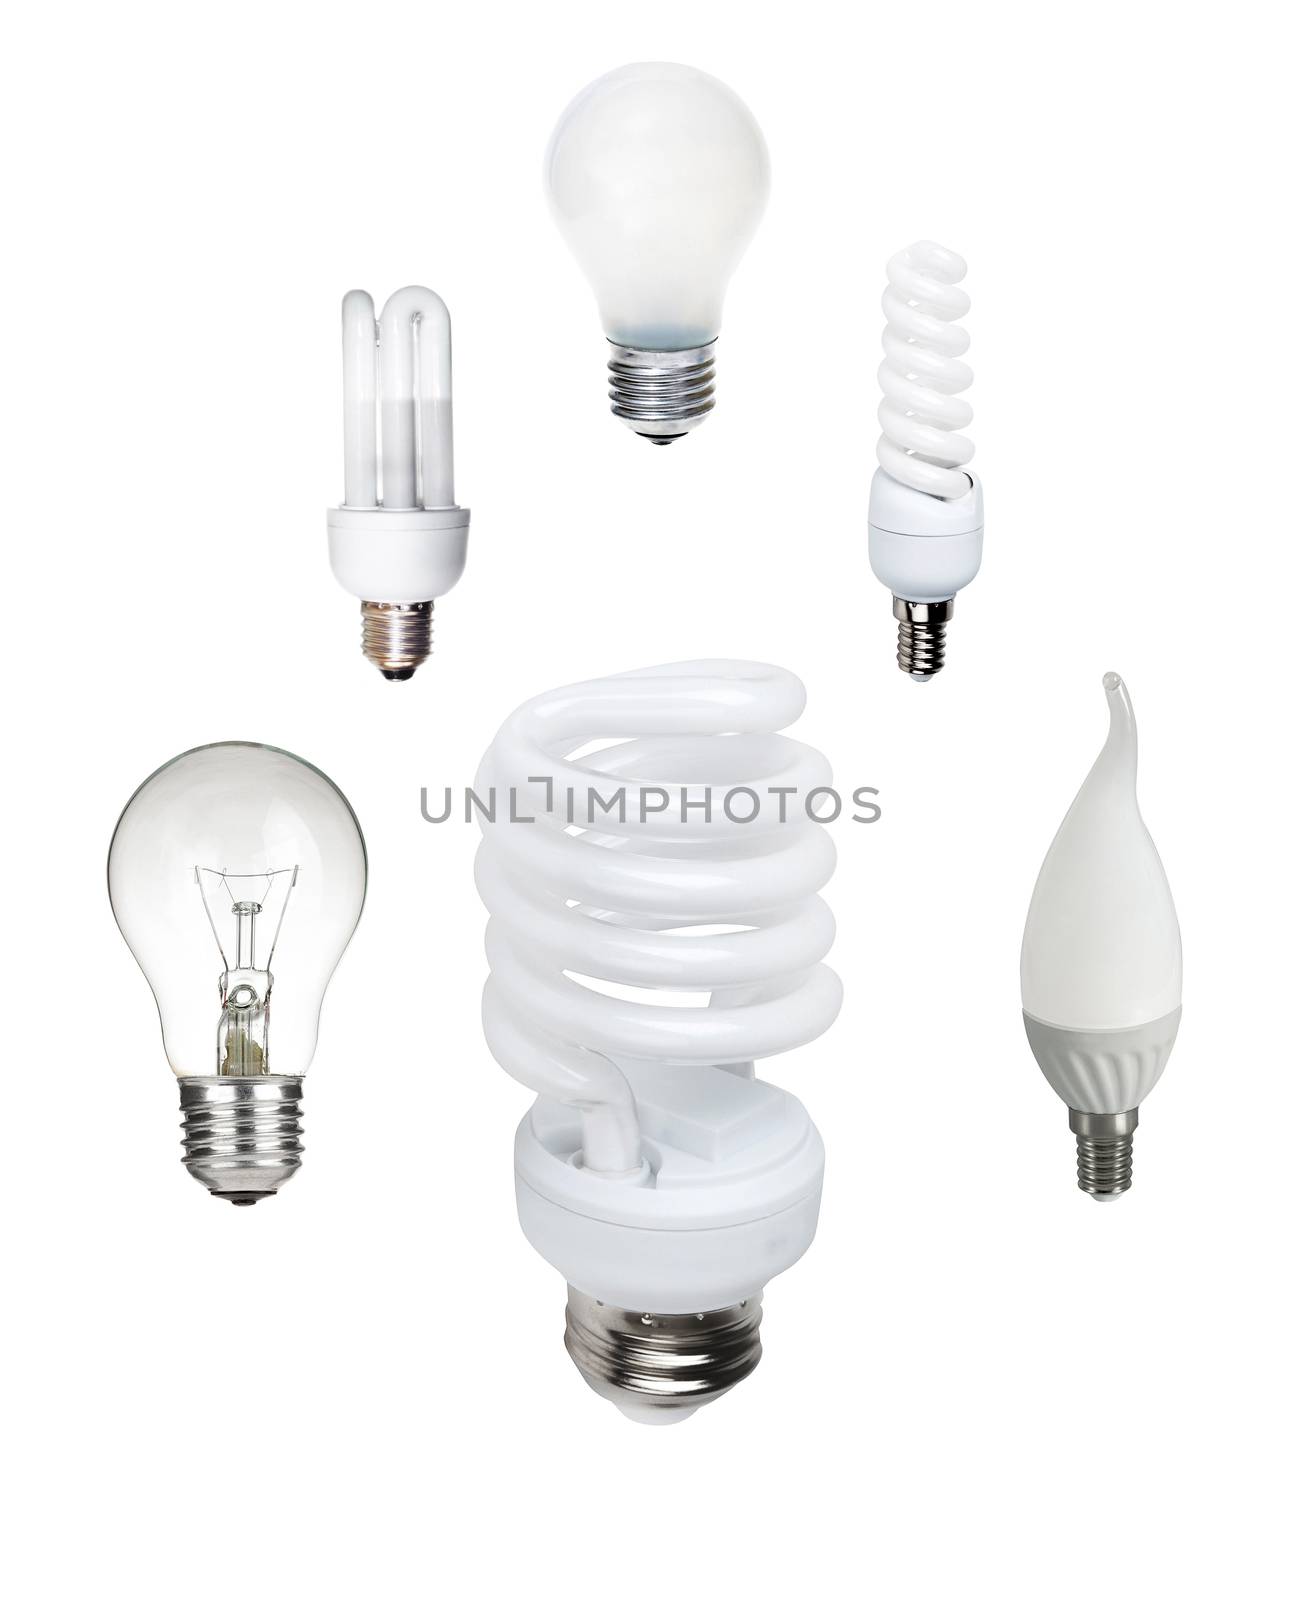 Classic and saving light bulb by ozaiachin